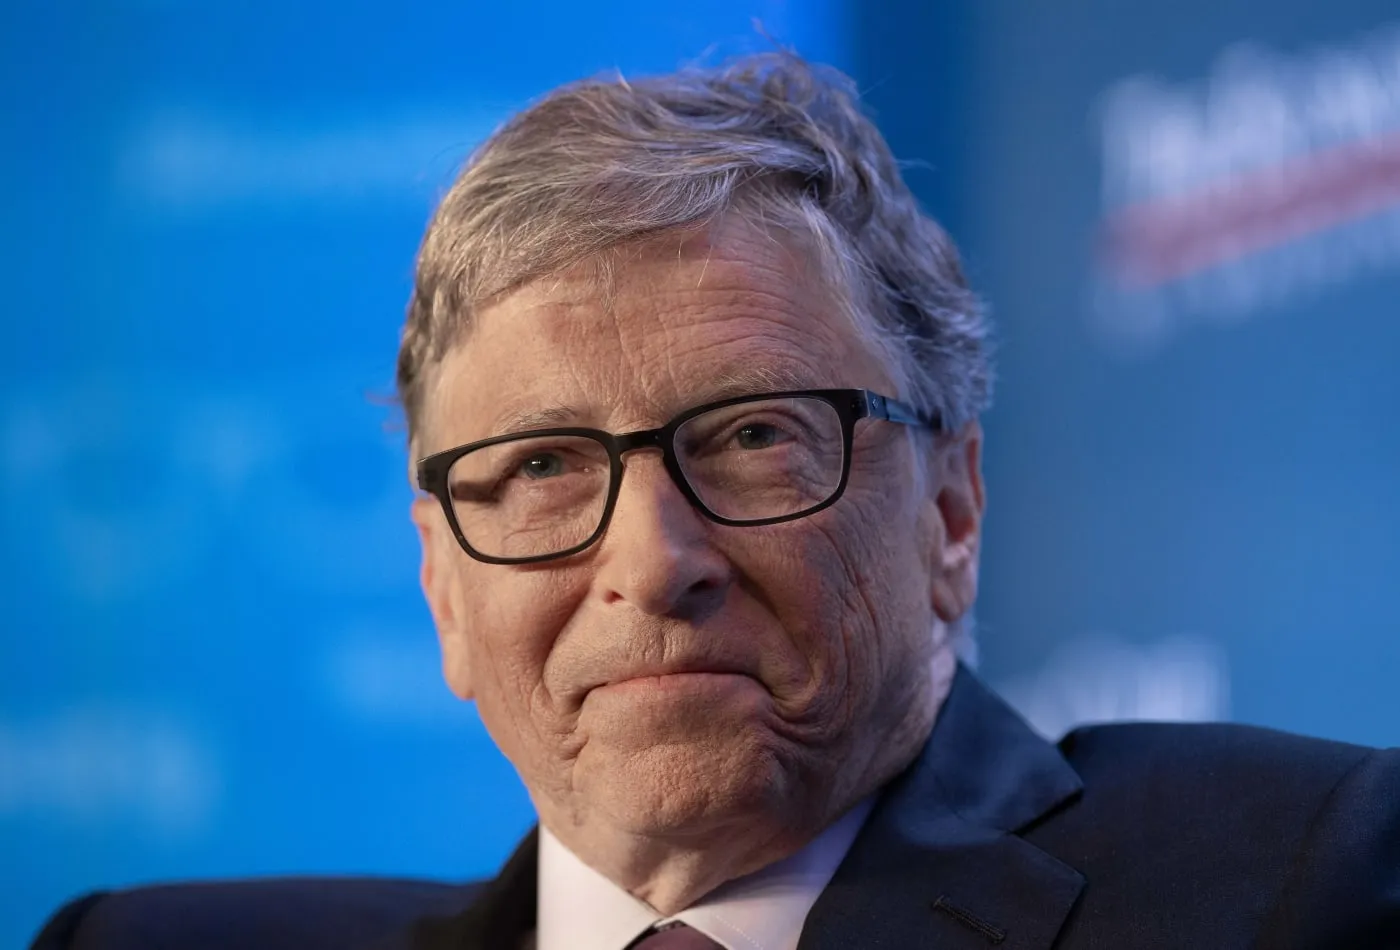 The skills Bill Gates learned at Microsoft